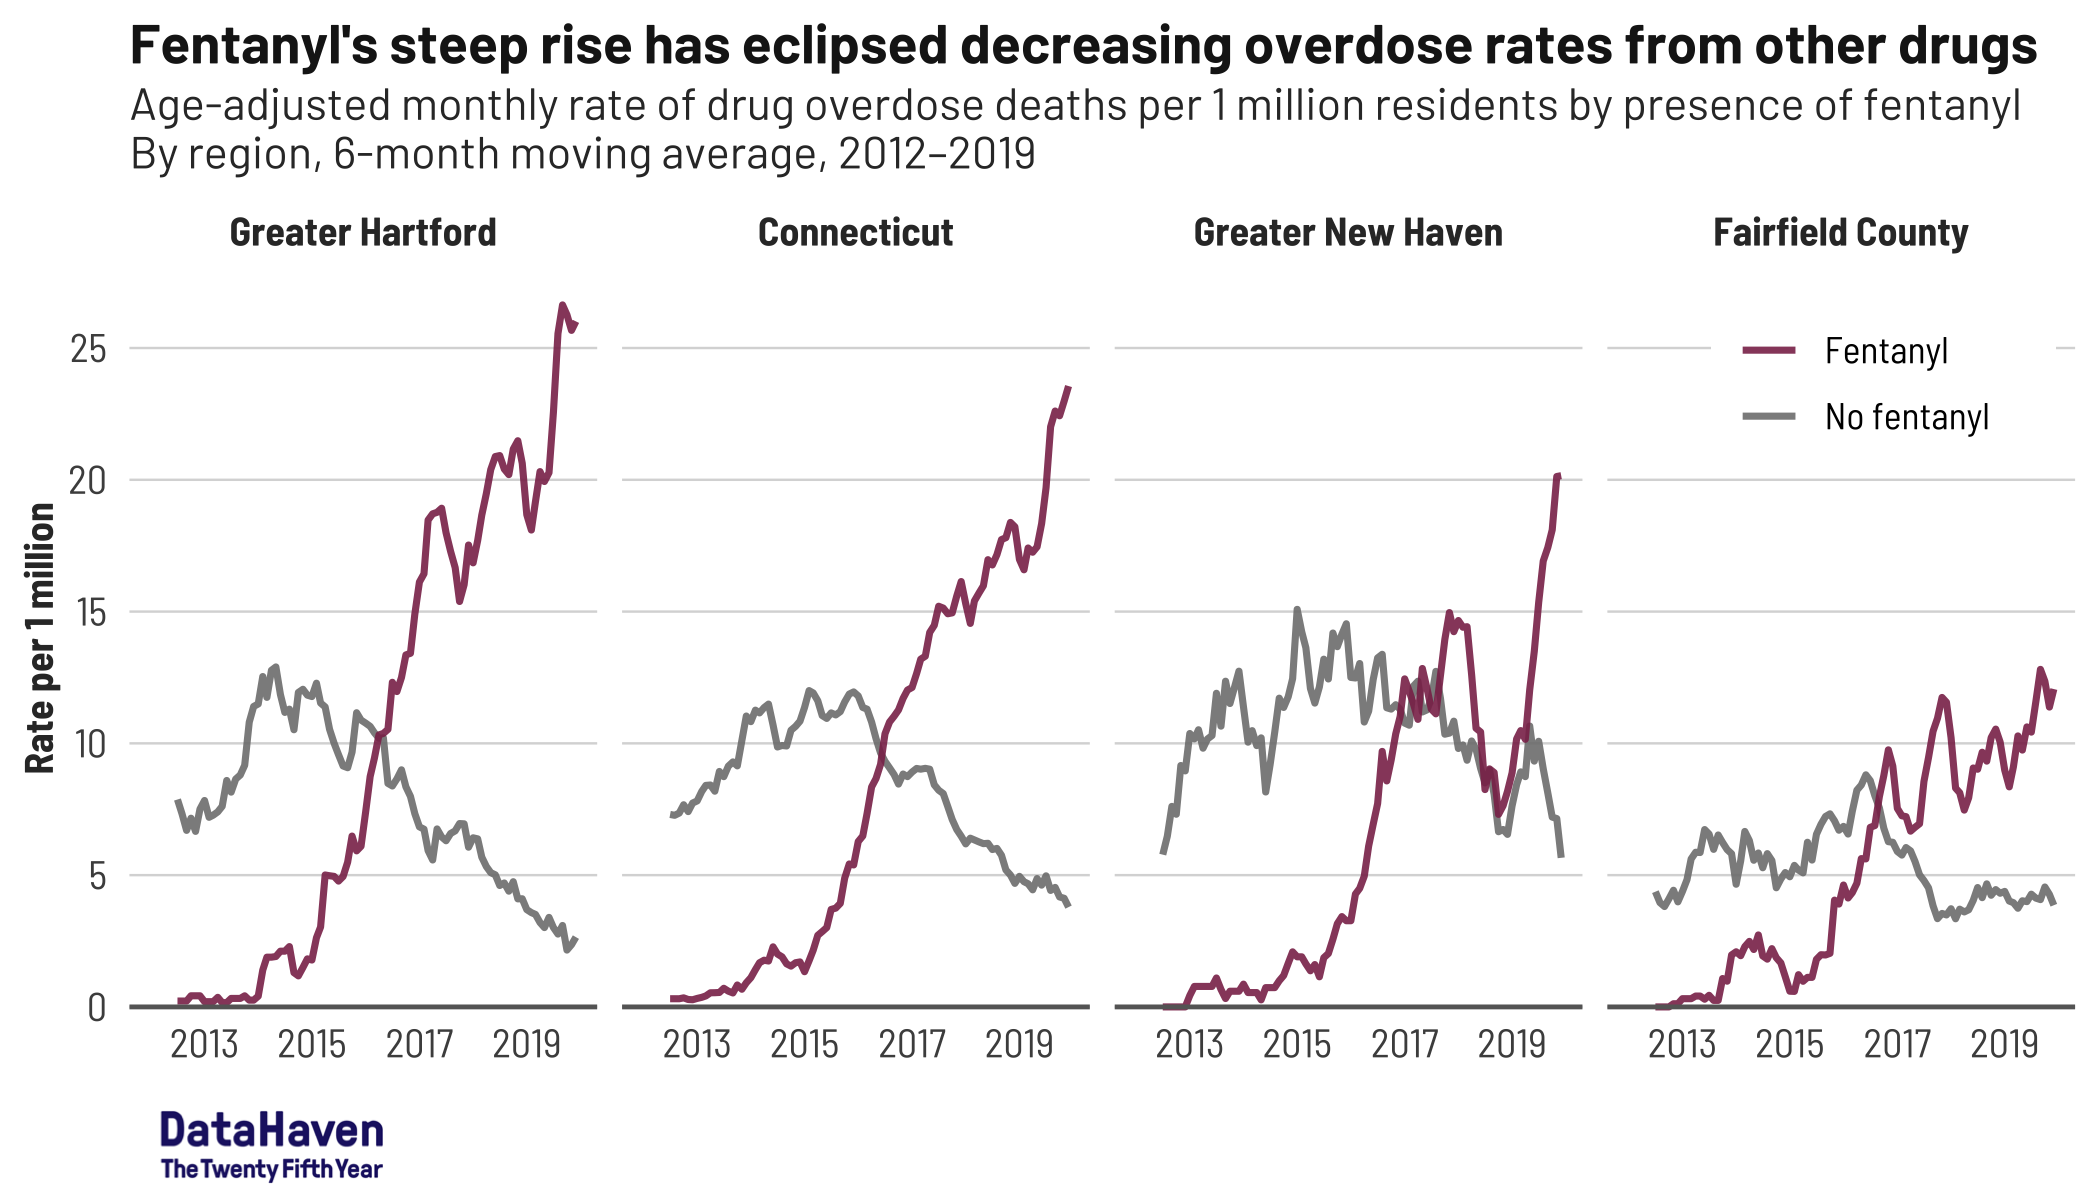 Connecticut opioid data by DataHaven fentanyl trend